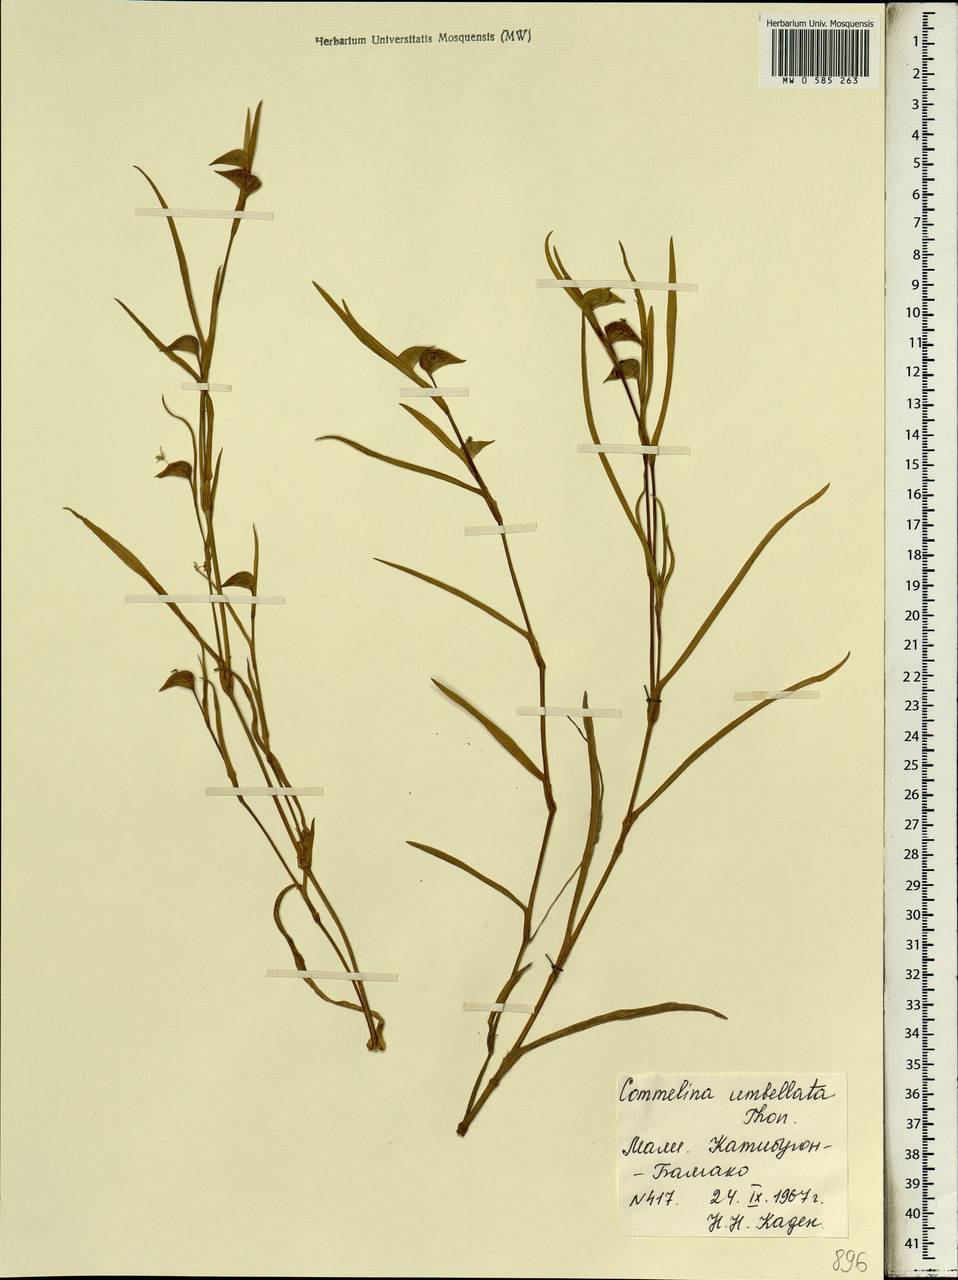 Commelina erecta L., Africa (AFR) (Mali)